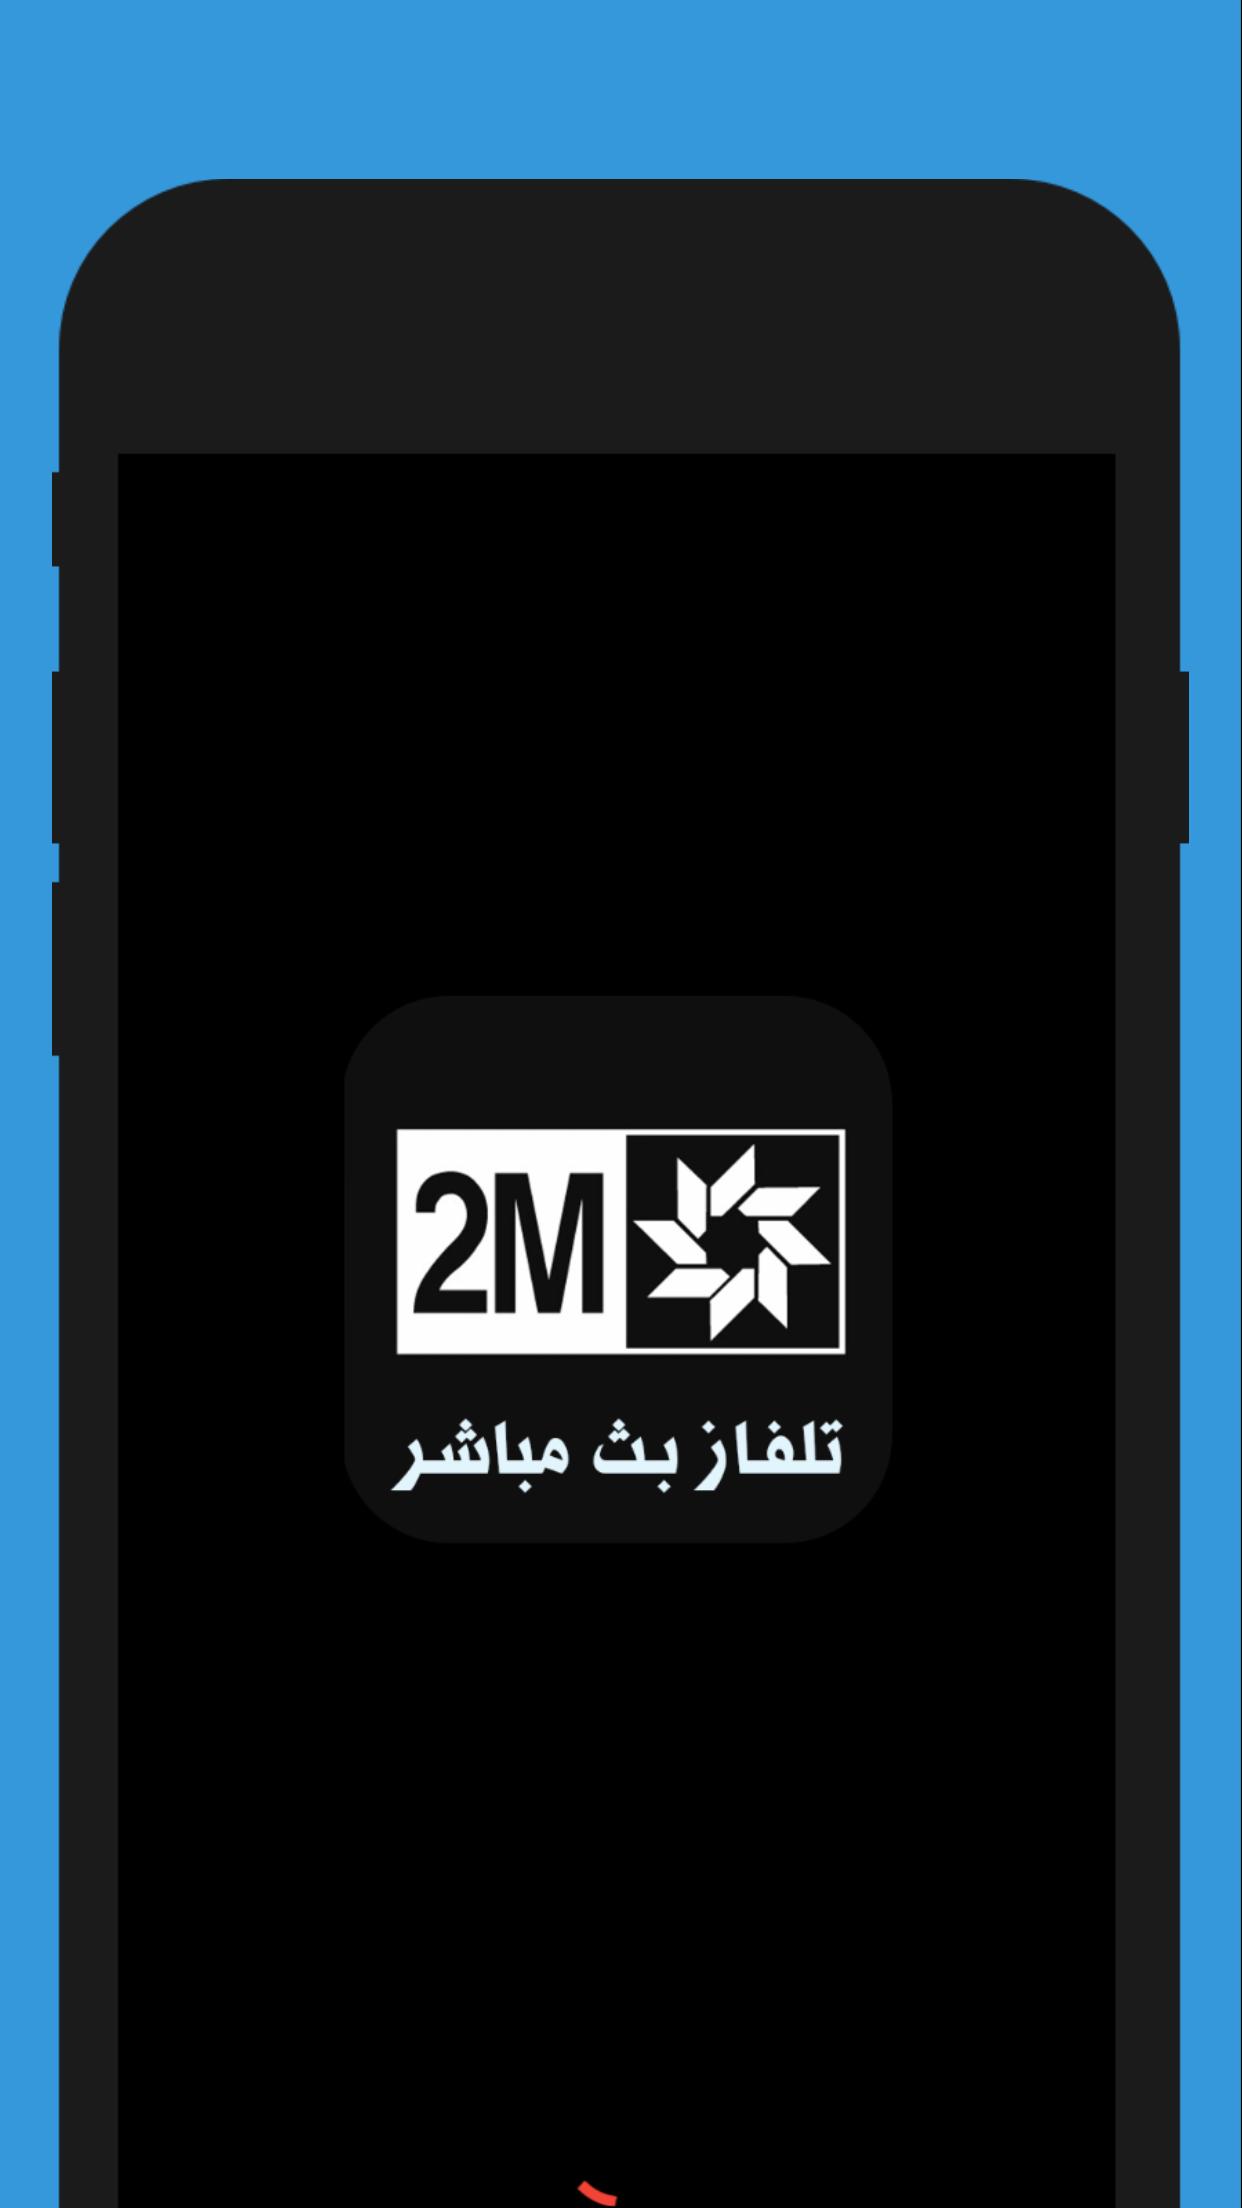 2M Maroc Douzim En Direct for Android - APK Download